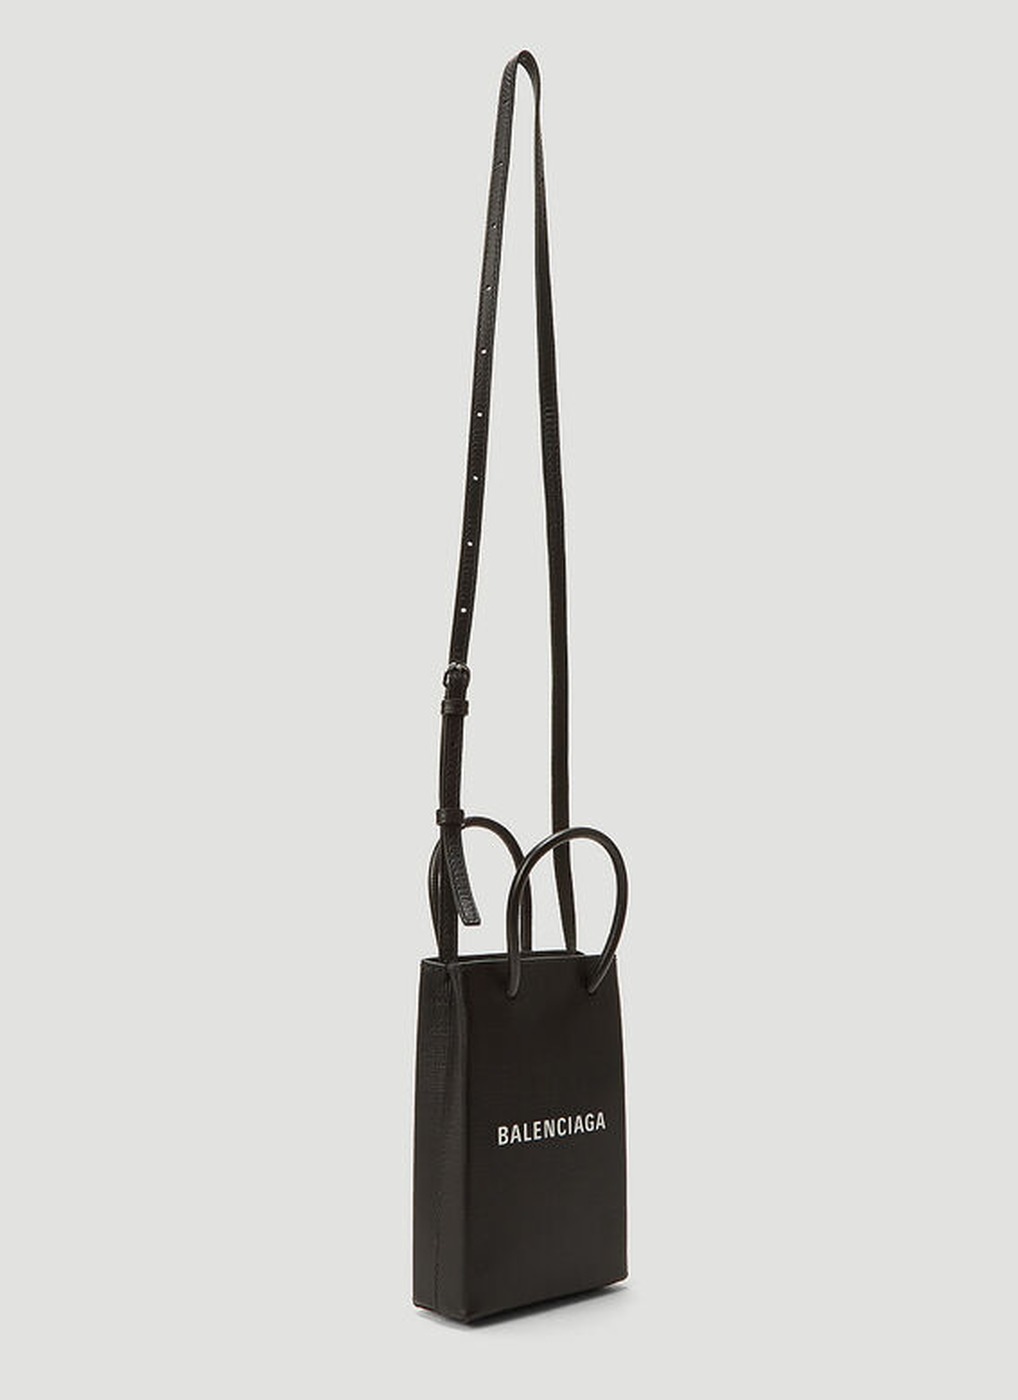 Shopping Phone Holder Bag in Black Balenciaga